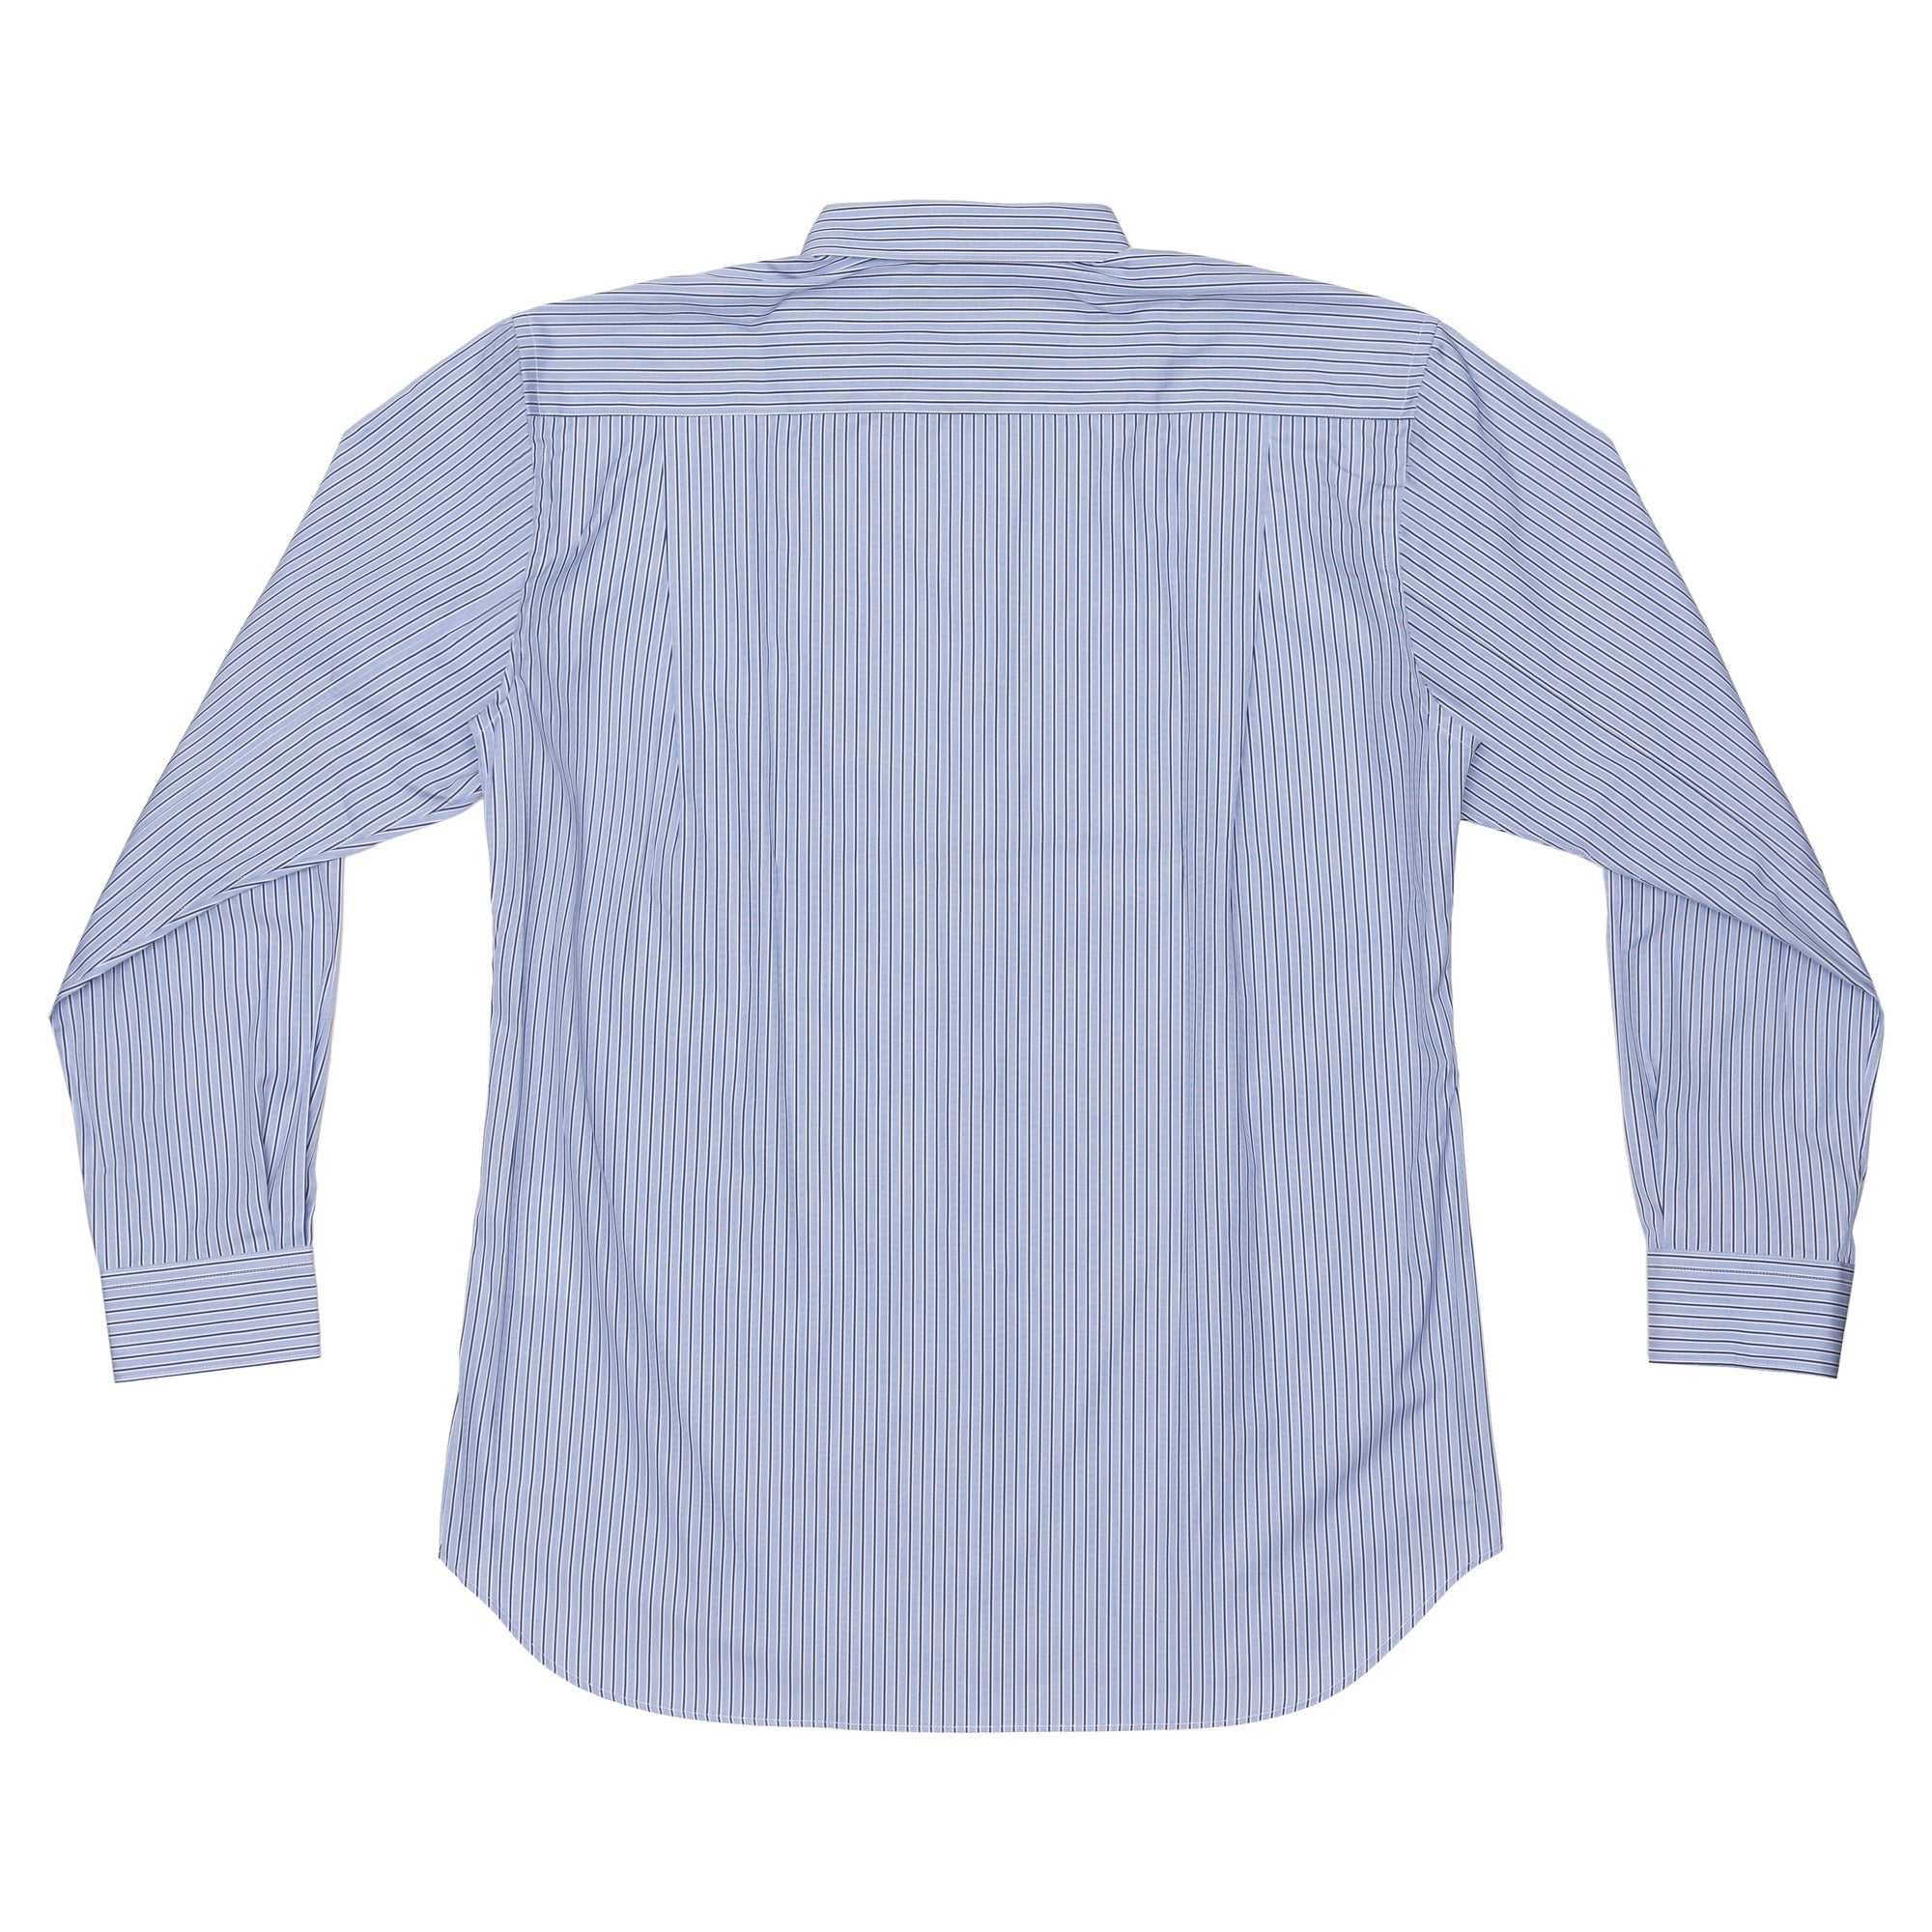 CDG SHIRT FOREVER -Narrow Classic  Yarn Dyed Cotton Poplin Shirt - (Stripe12) view 2